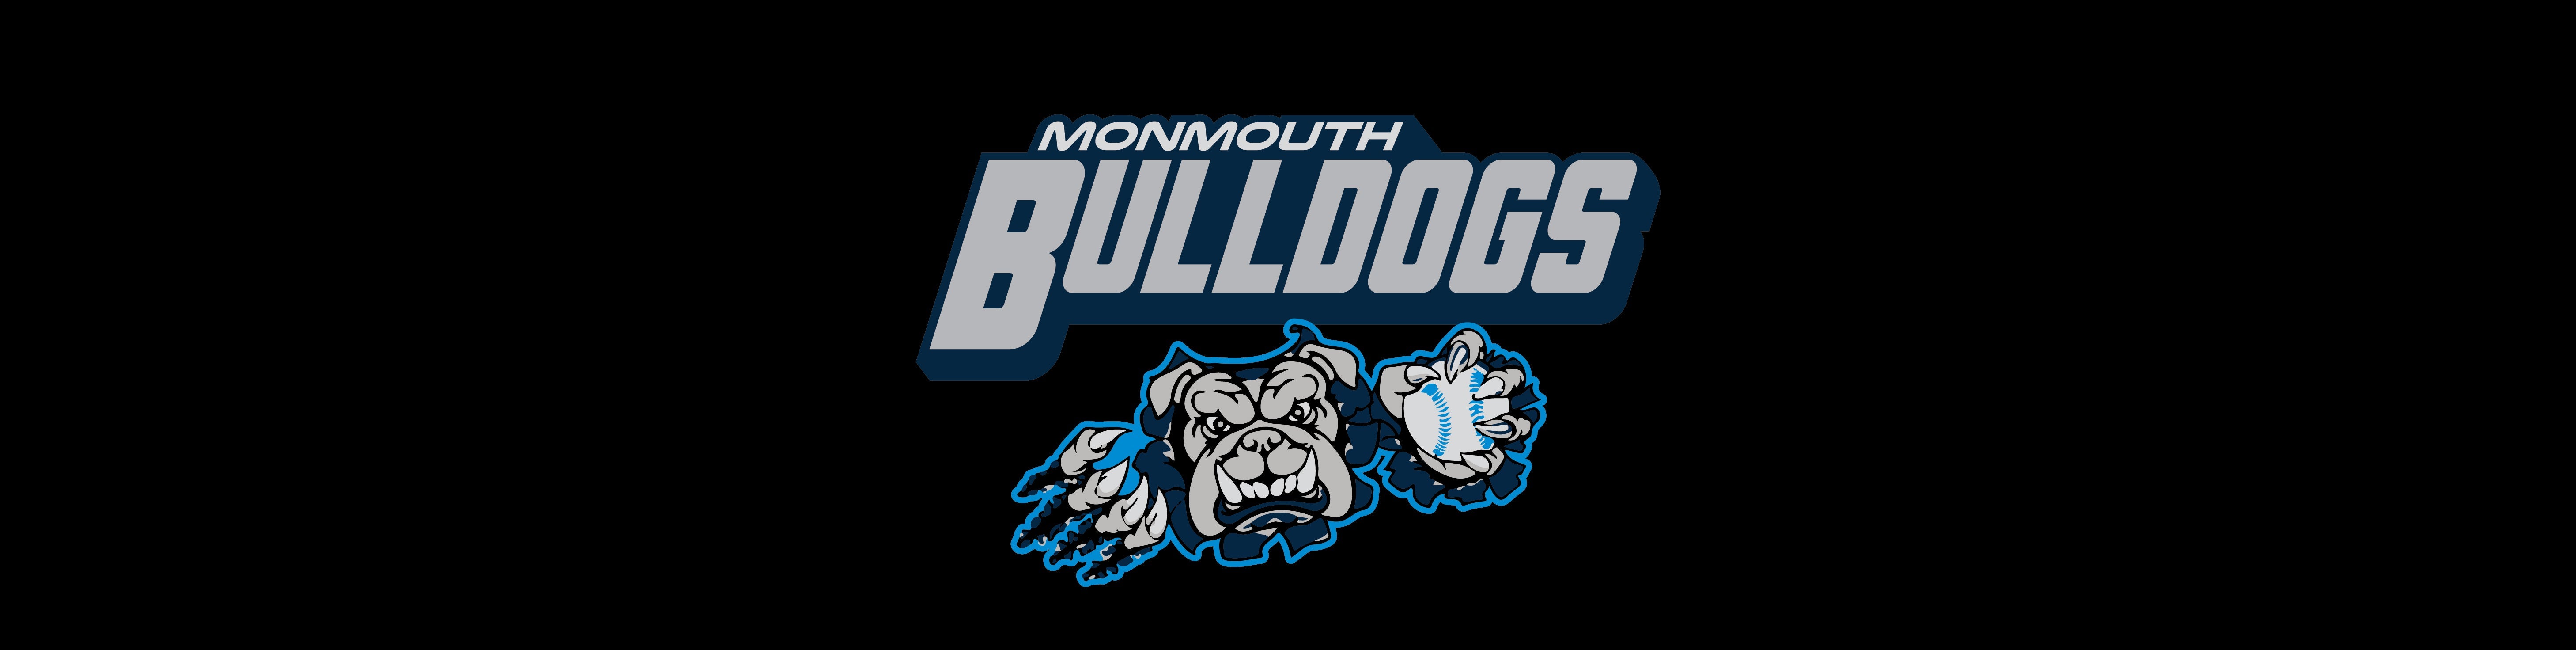 Monmouth Bulldogs